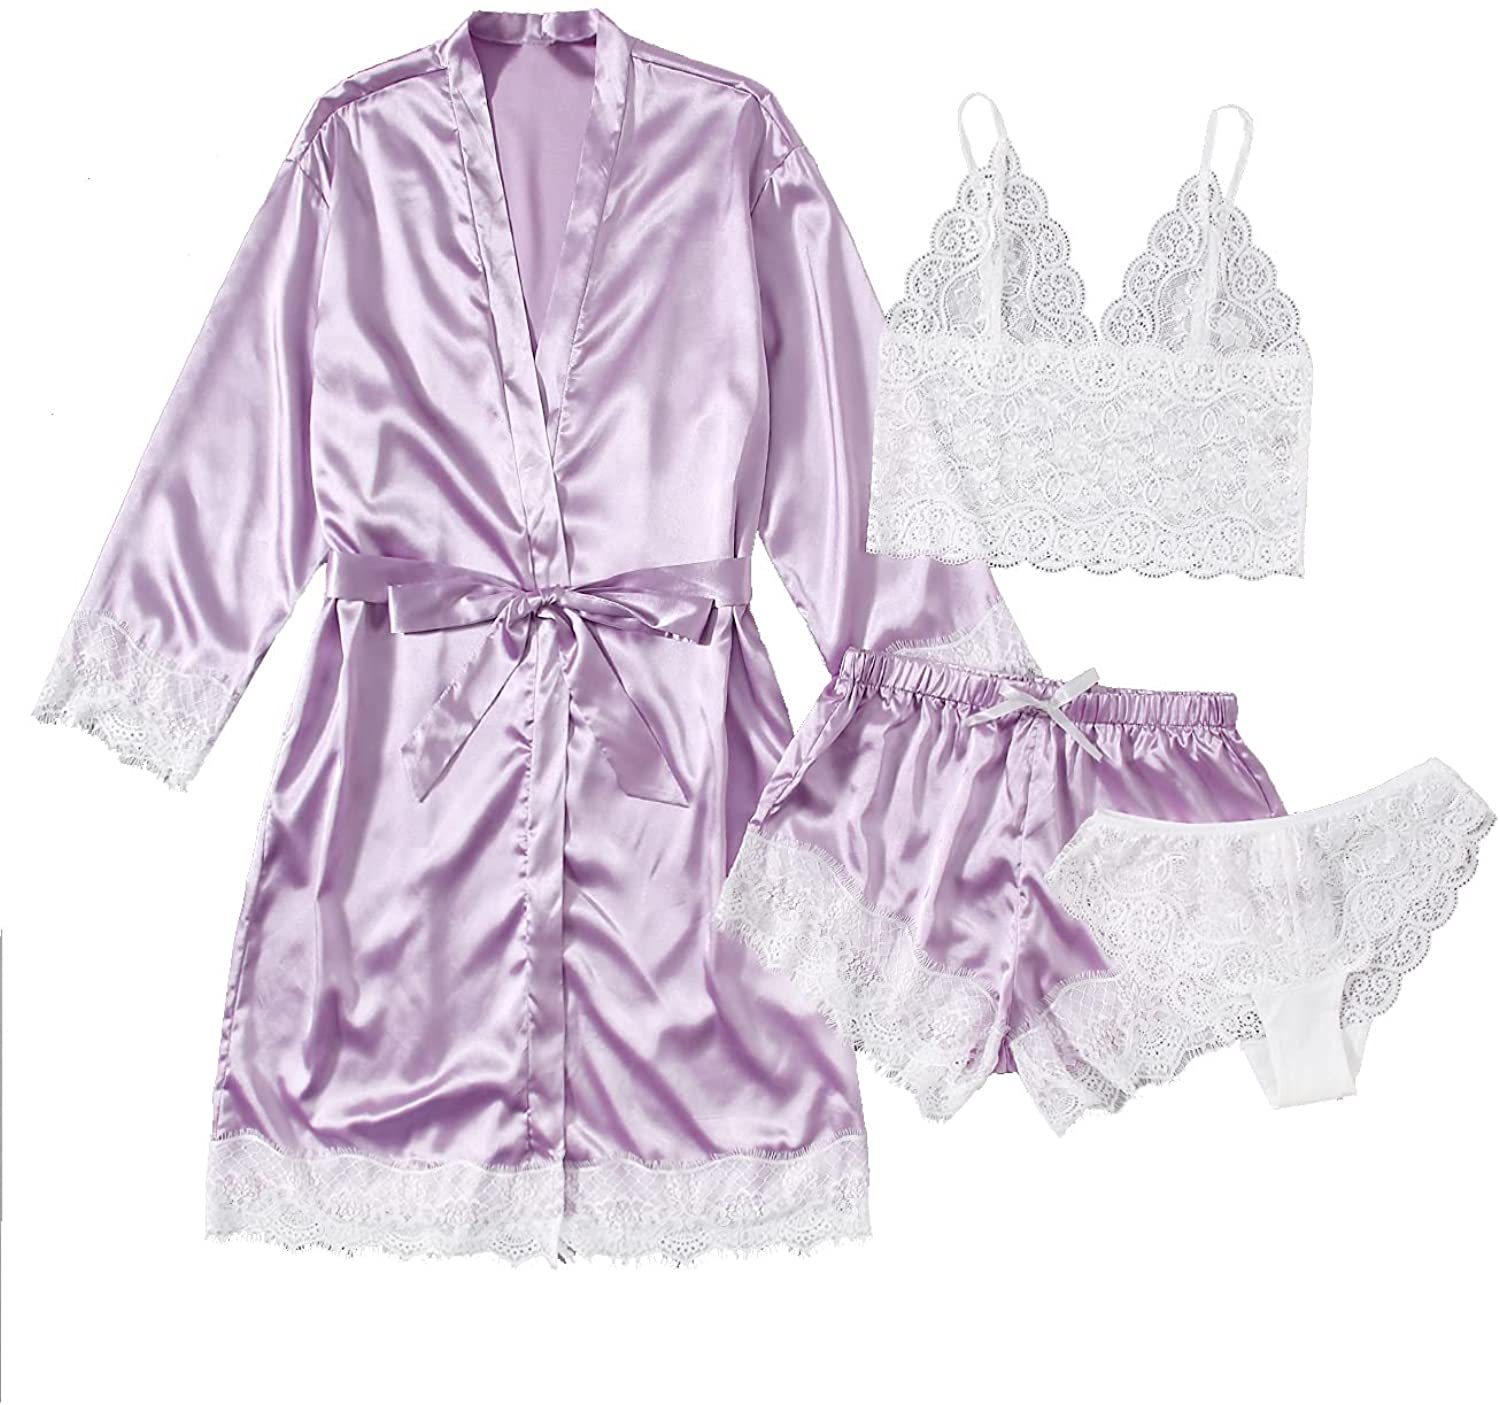 SOLY HUX Women's Sleepwear 4pcs Floral Lace Trim Satin Cami Pajama